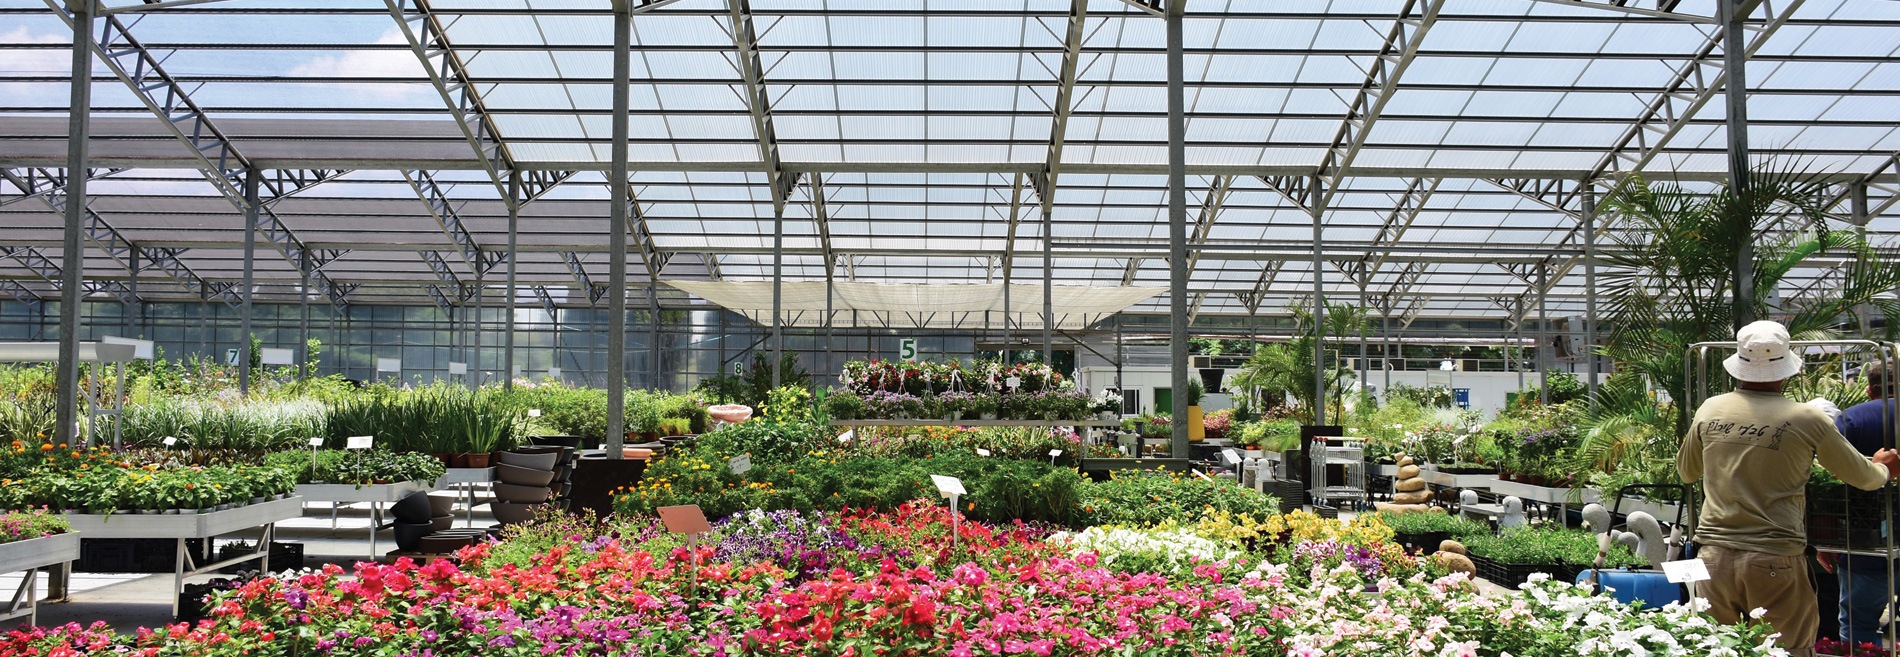  GREENHOUSE  PLANT NURSERY  ISRAEL Palram Industries Ltd